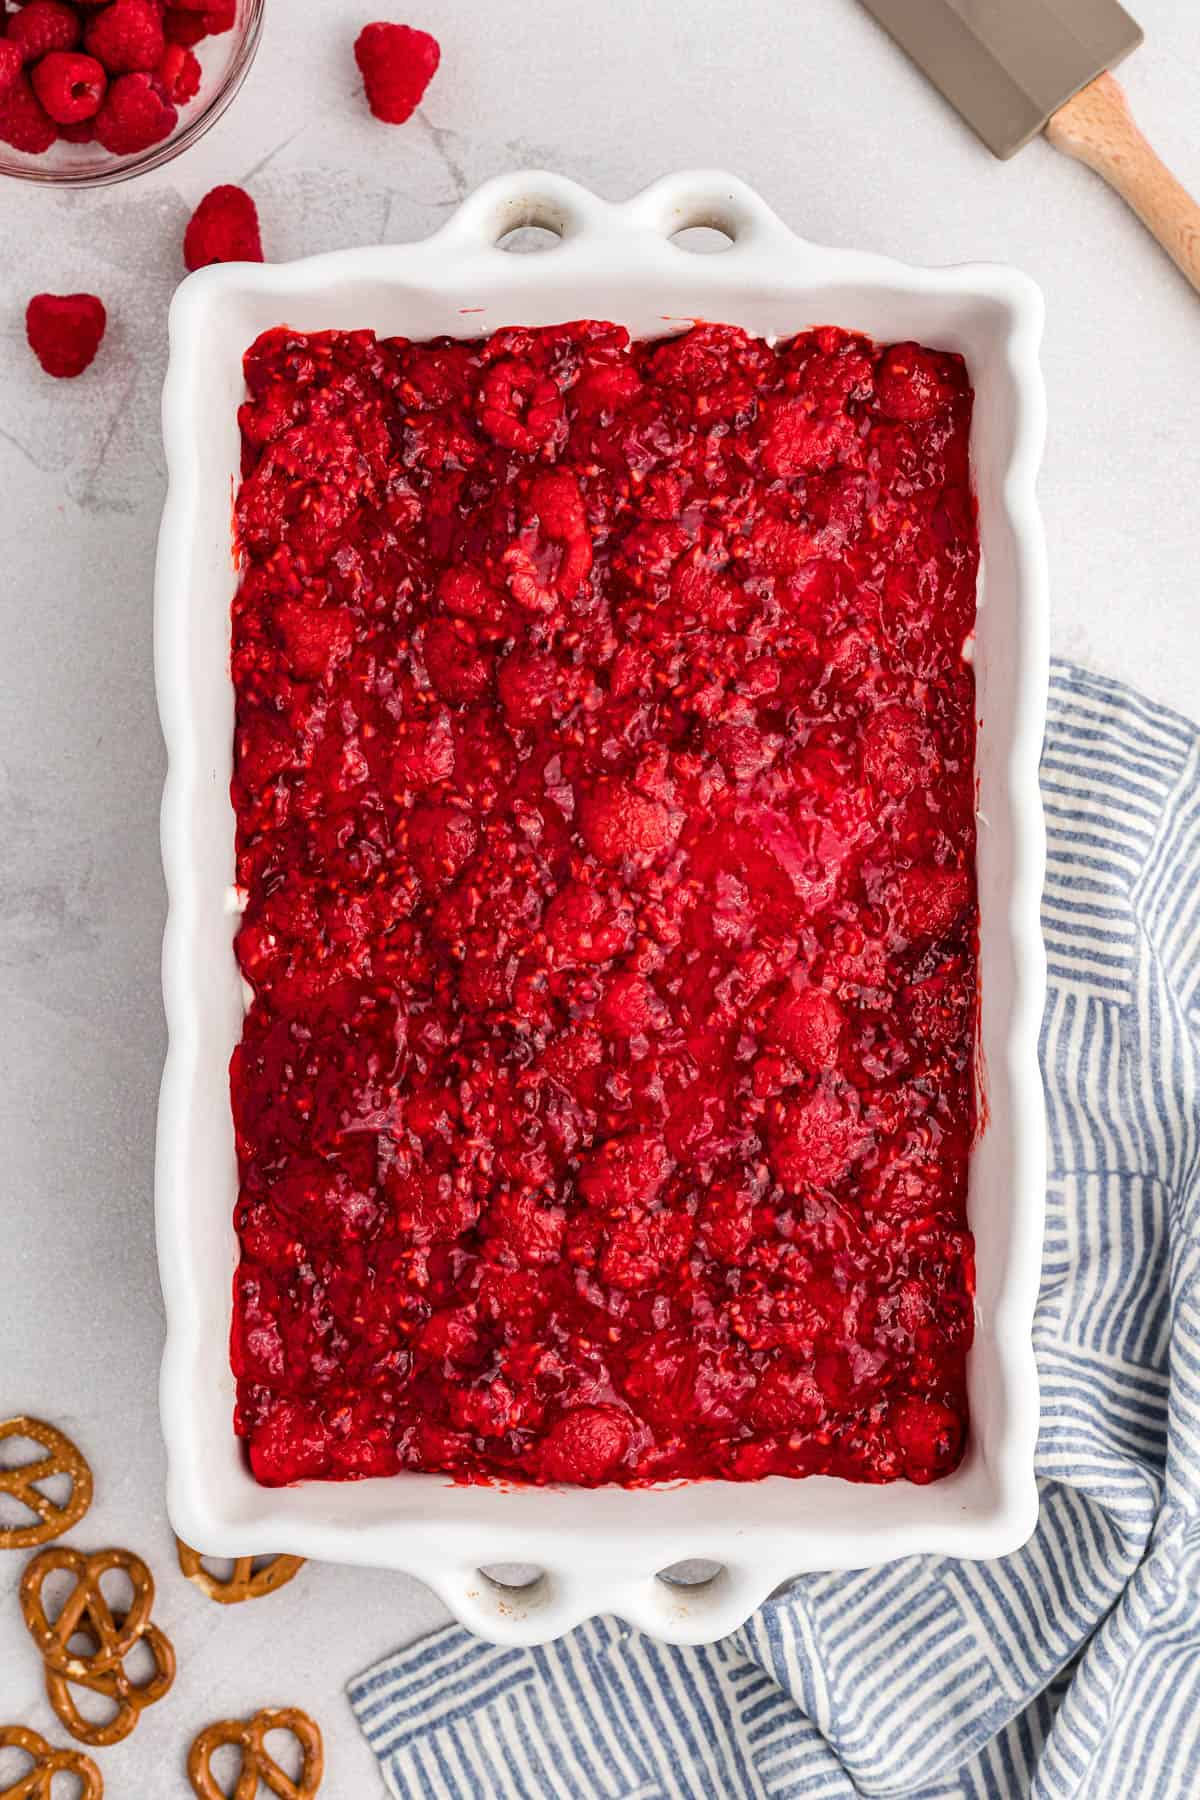 raspberries in jello for raspberry pretzel dessert recipe.